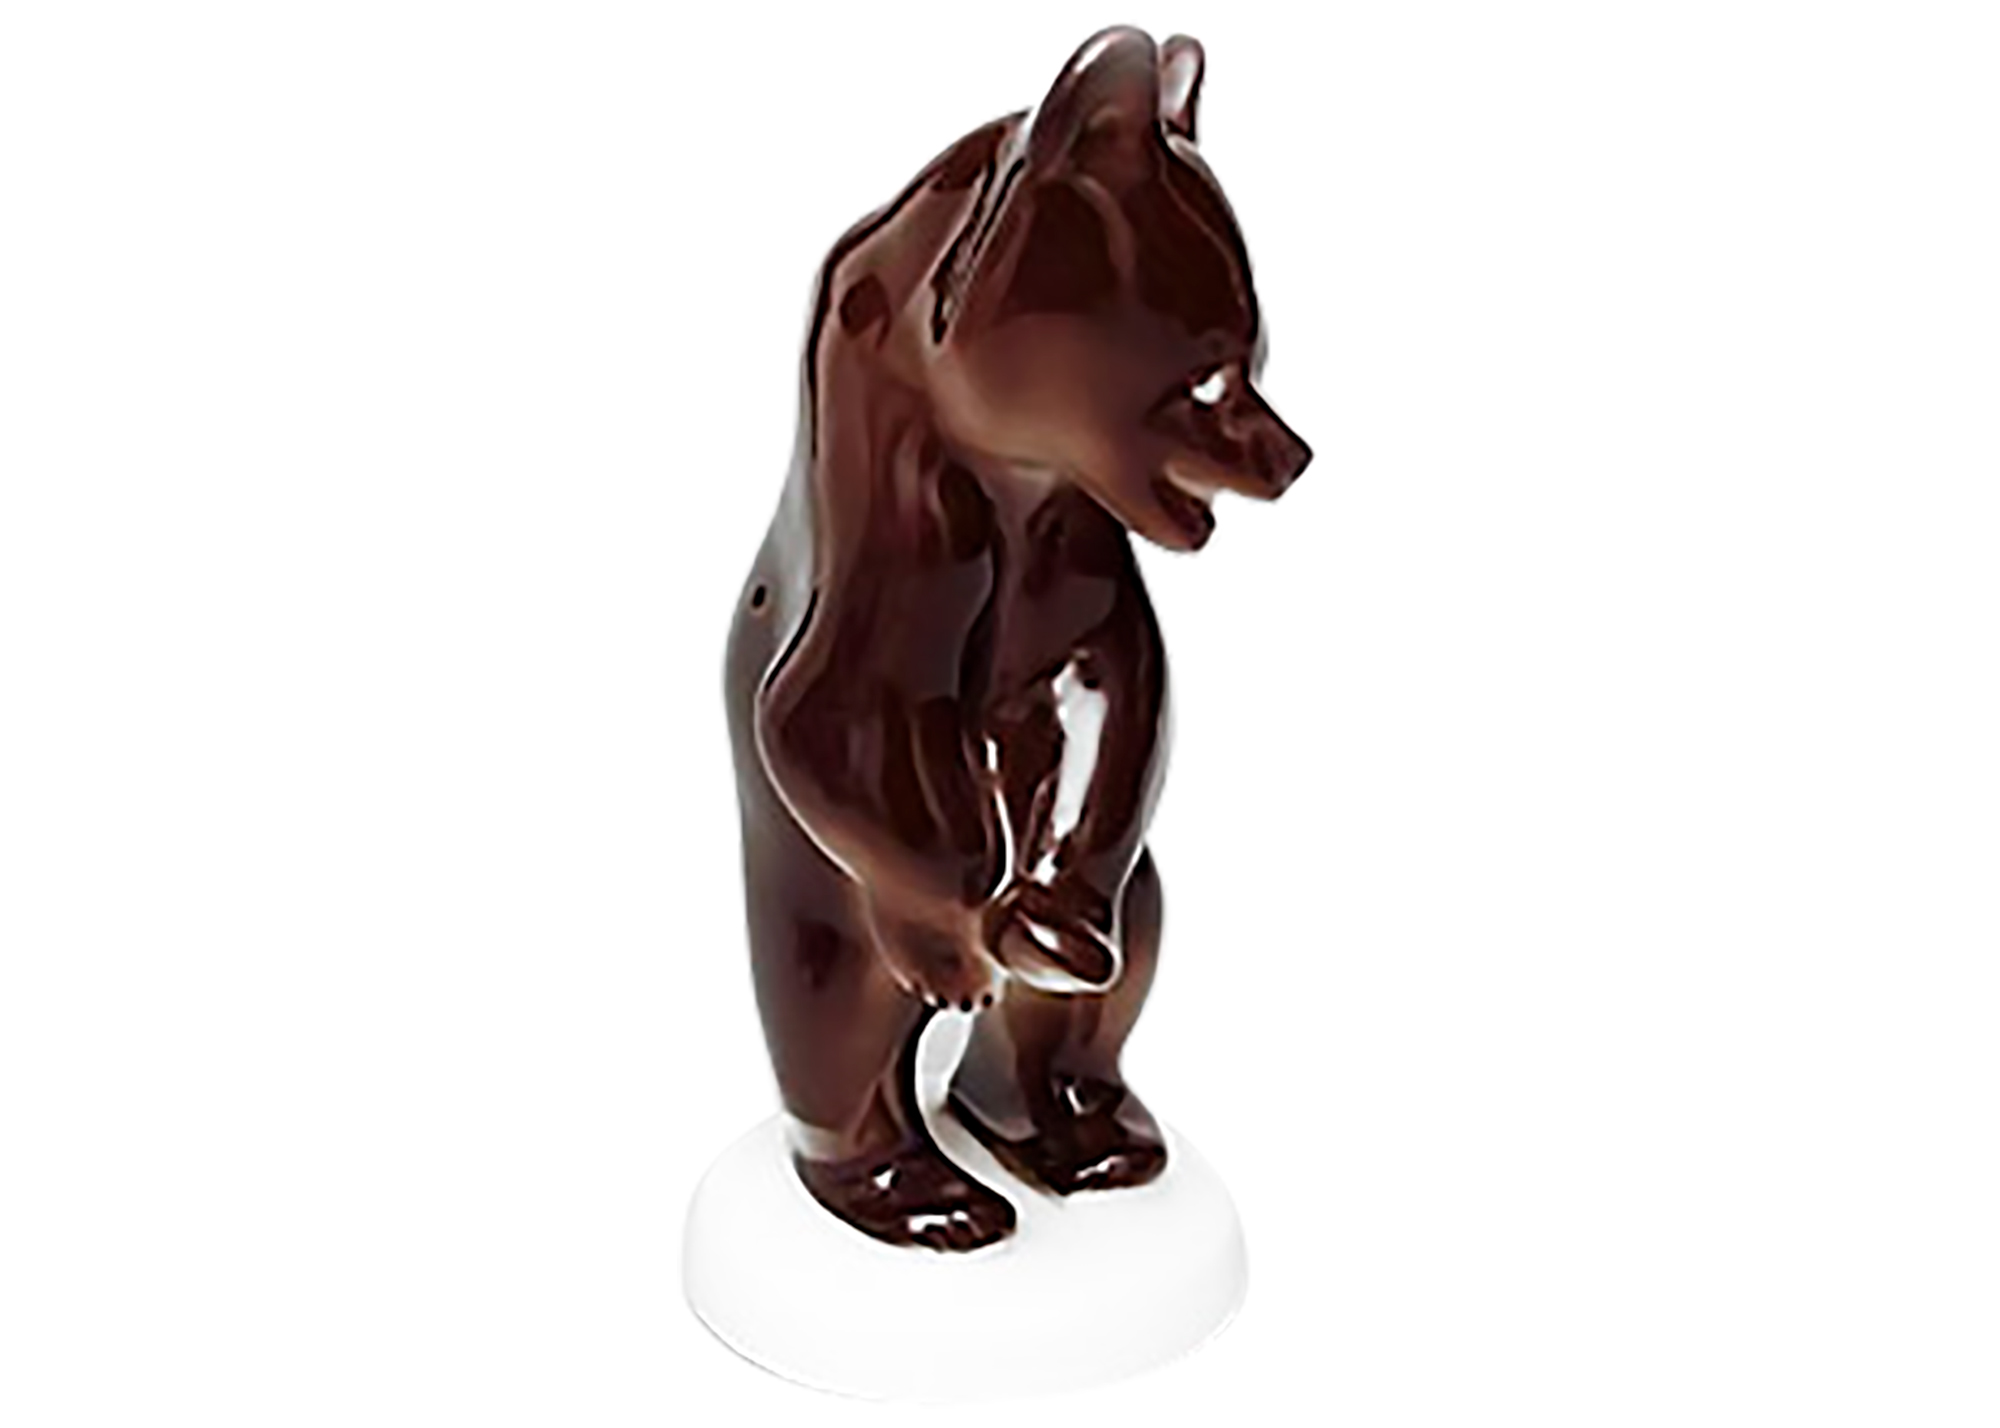 Buy Upright Bear on Stand Figurine at GoldenCockerel.com